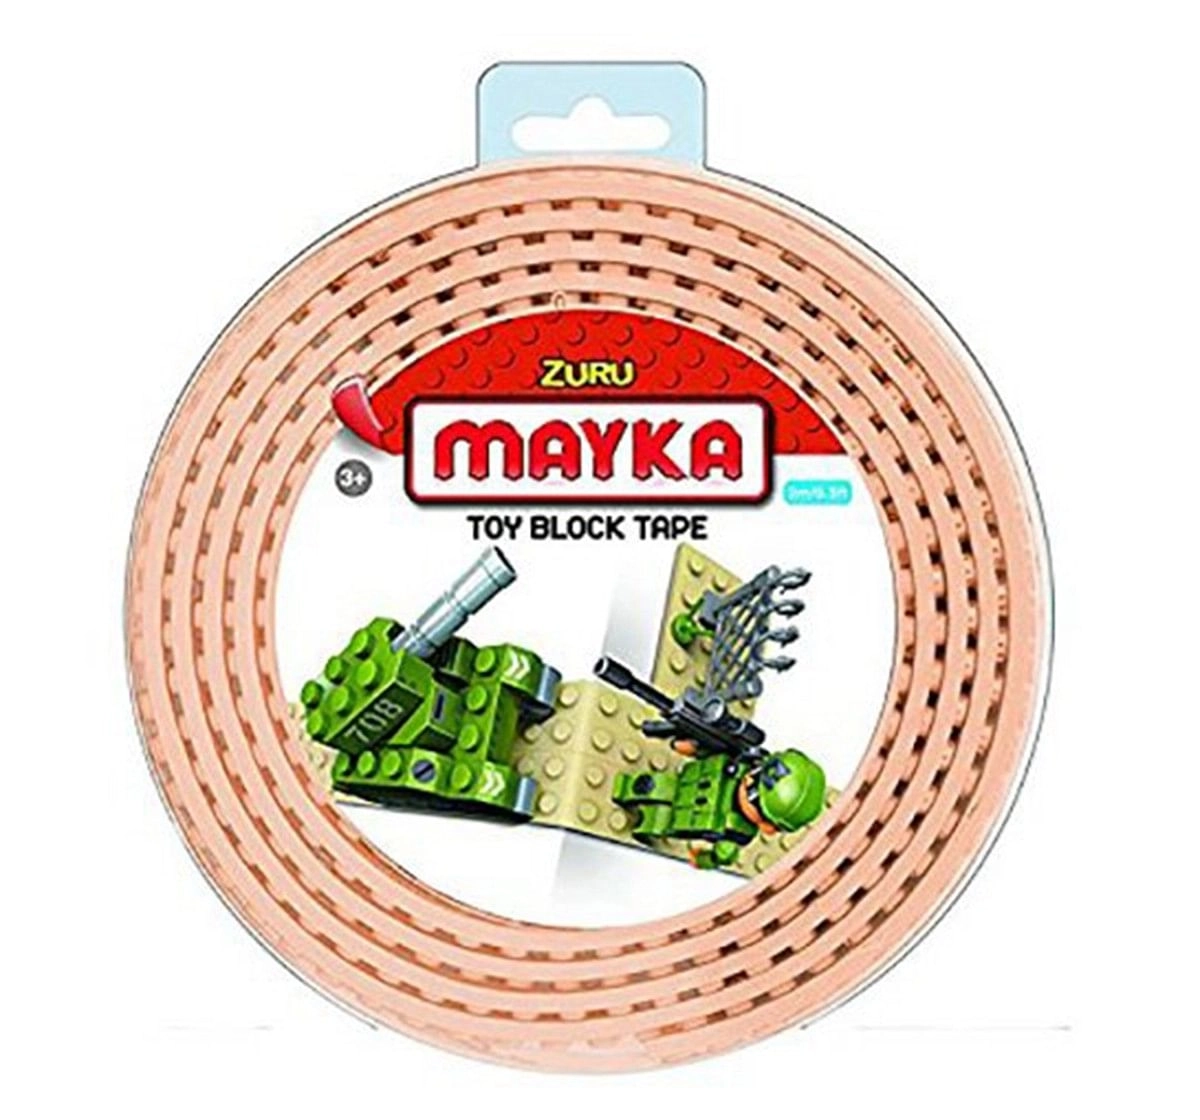 Zuru Mayka Toy Block Tape, 6.5tf/2m 2-stud (Assorted), LEGO Compatible , 3Y+